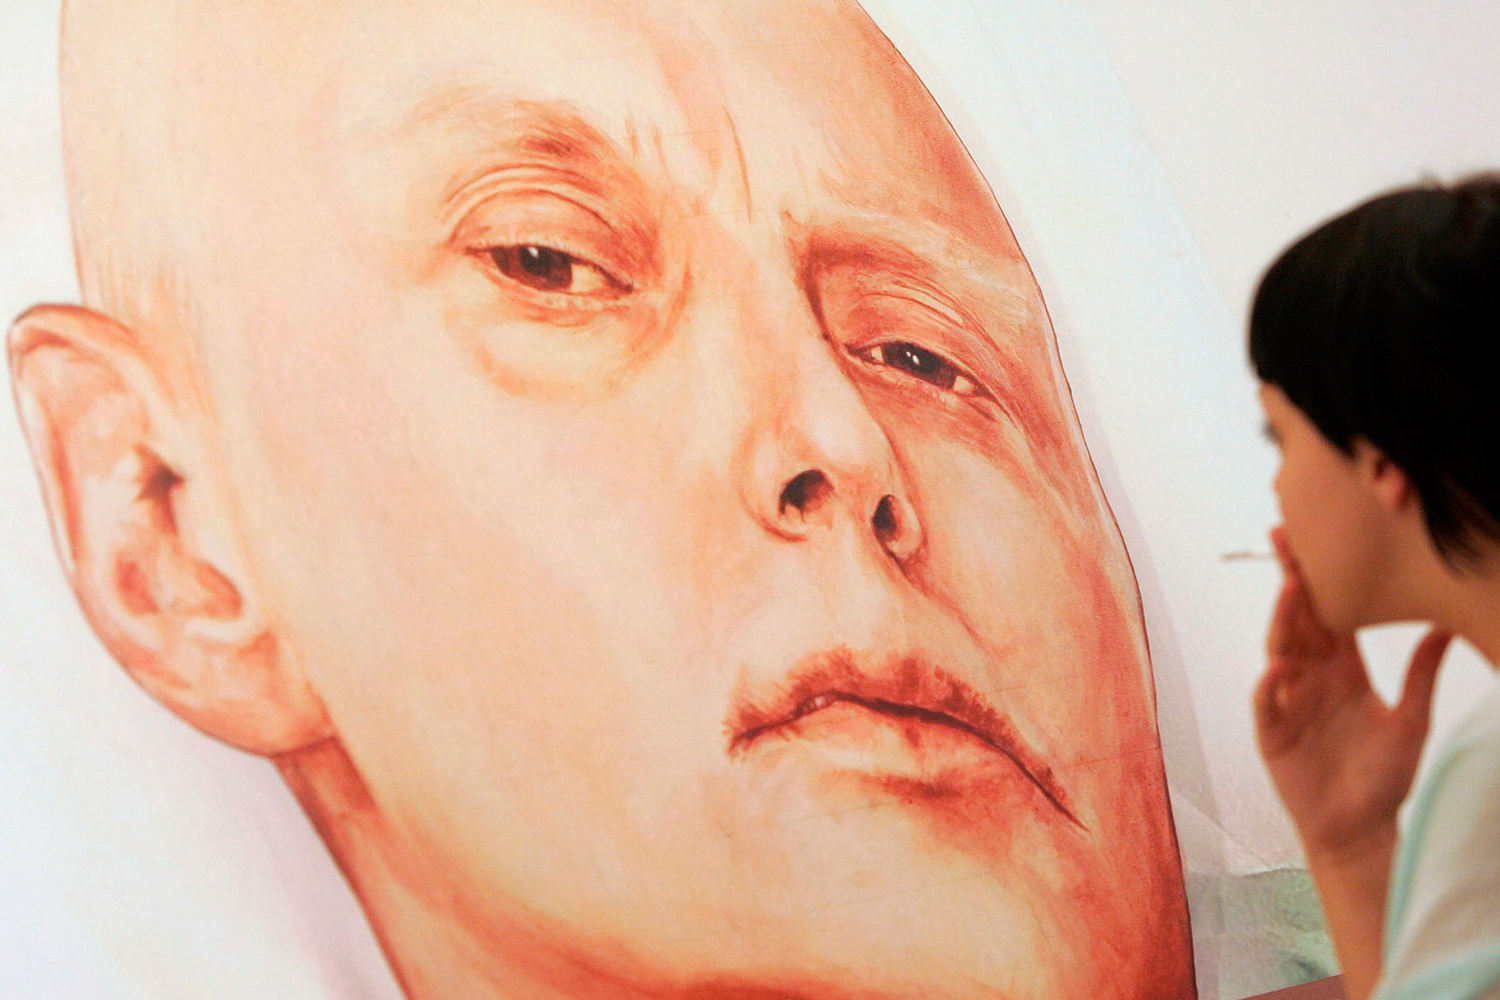 La Justicia británica dice que «probablemente» Putin ordenó matar al exespía Litvinenko